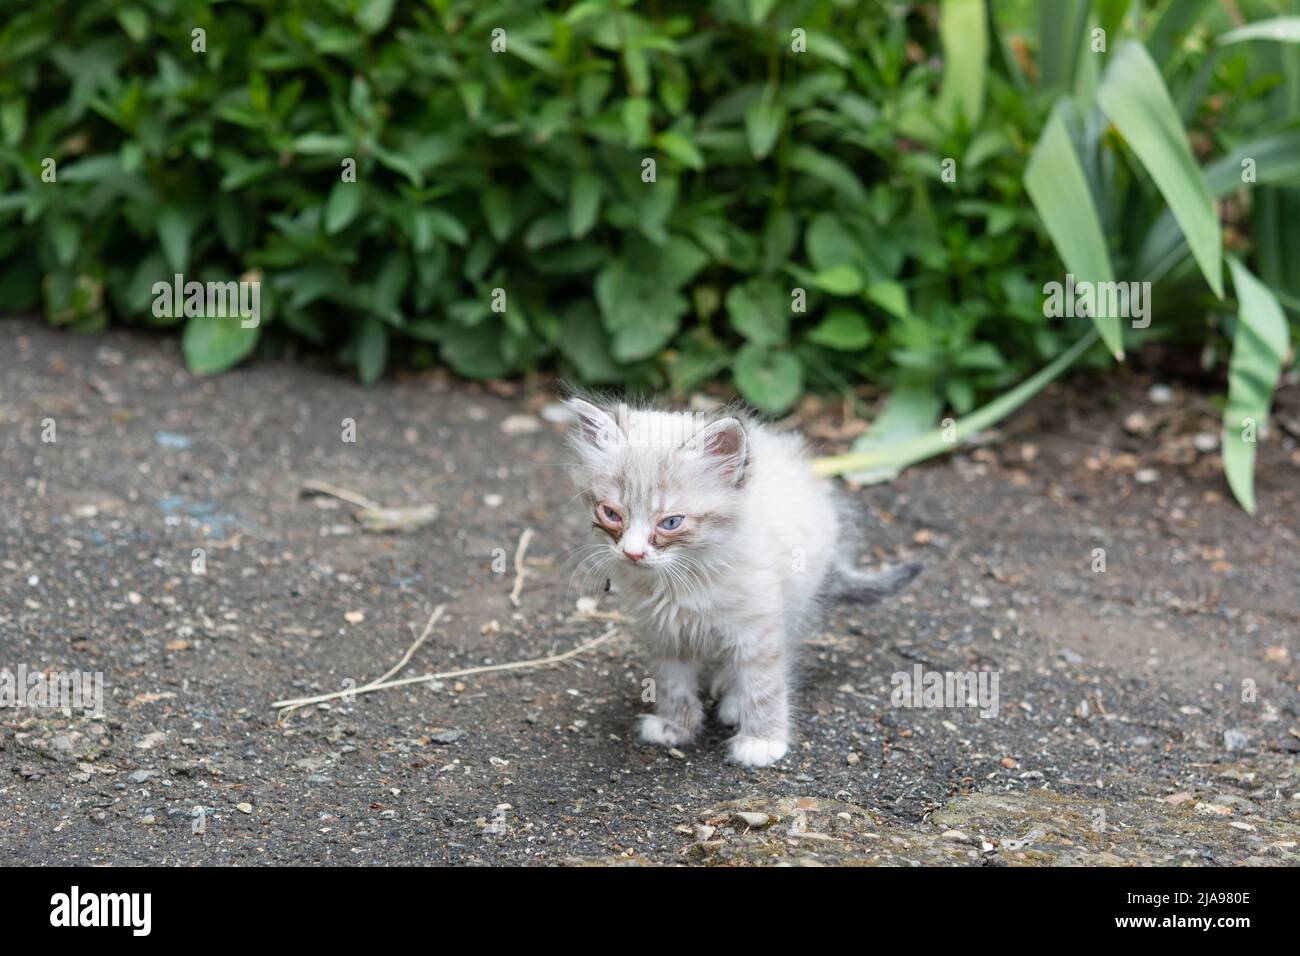 Kitten eye disease. Small gray and white kitten with eye disease. Kitten sits on the ground among the green grass Stock Photo